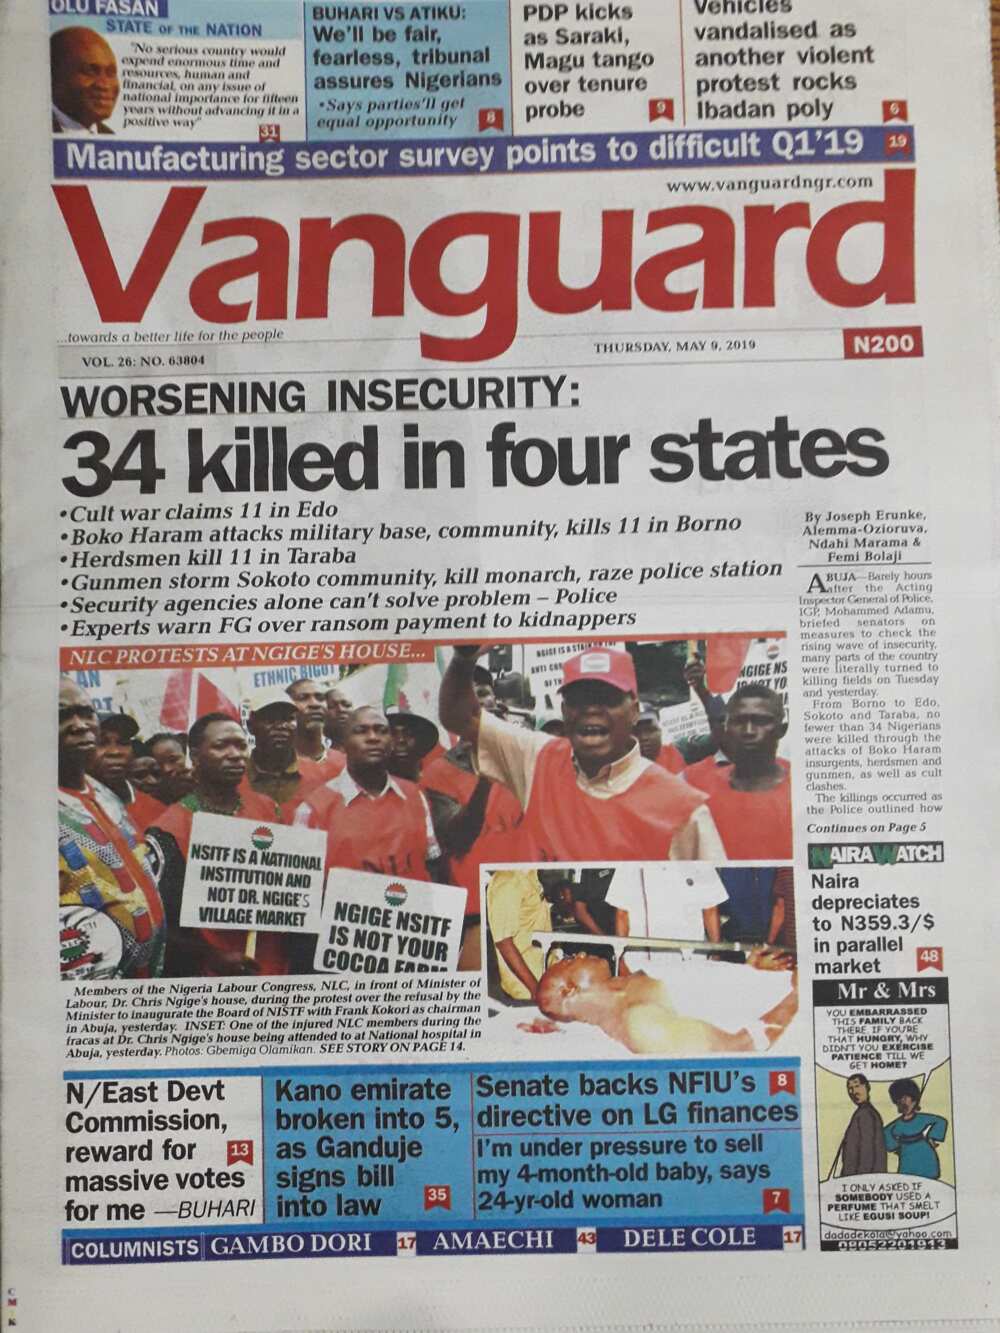 Vanguard newspaper of May 9